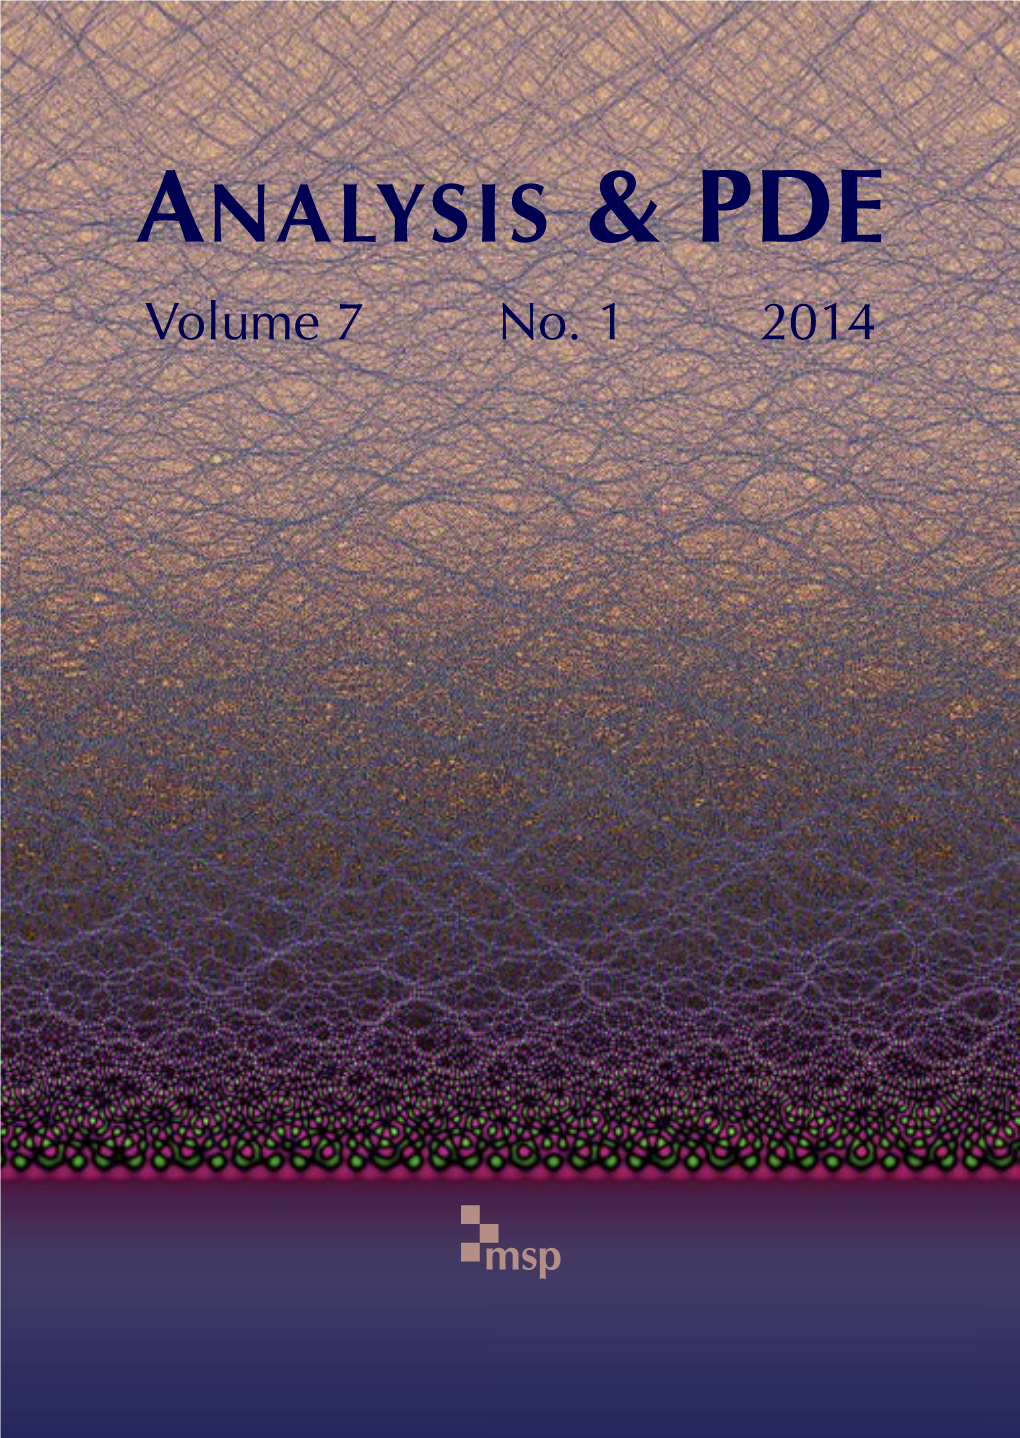 Analysis & PDE Vol. 7 (2014)